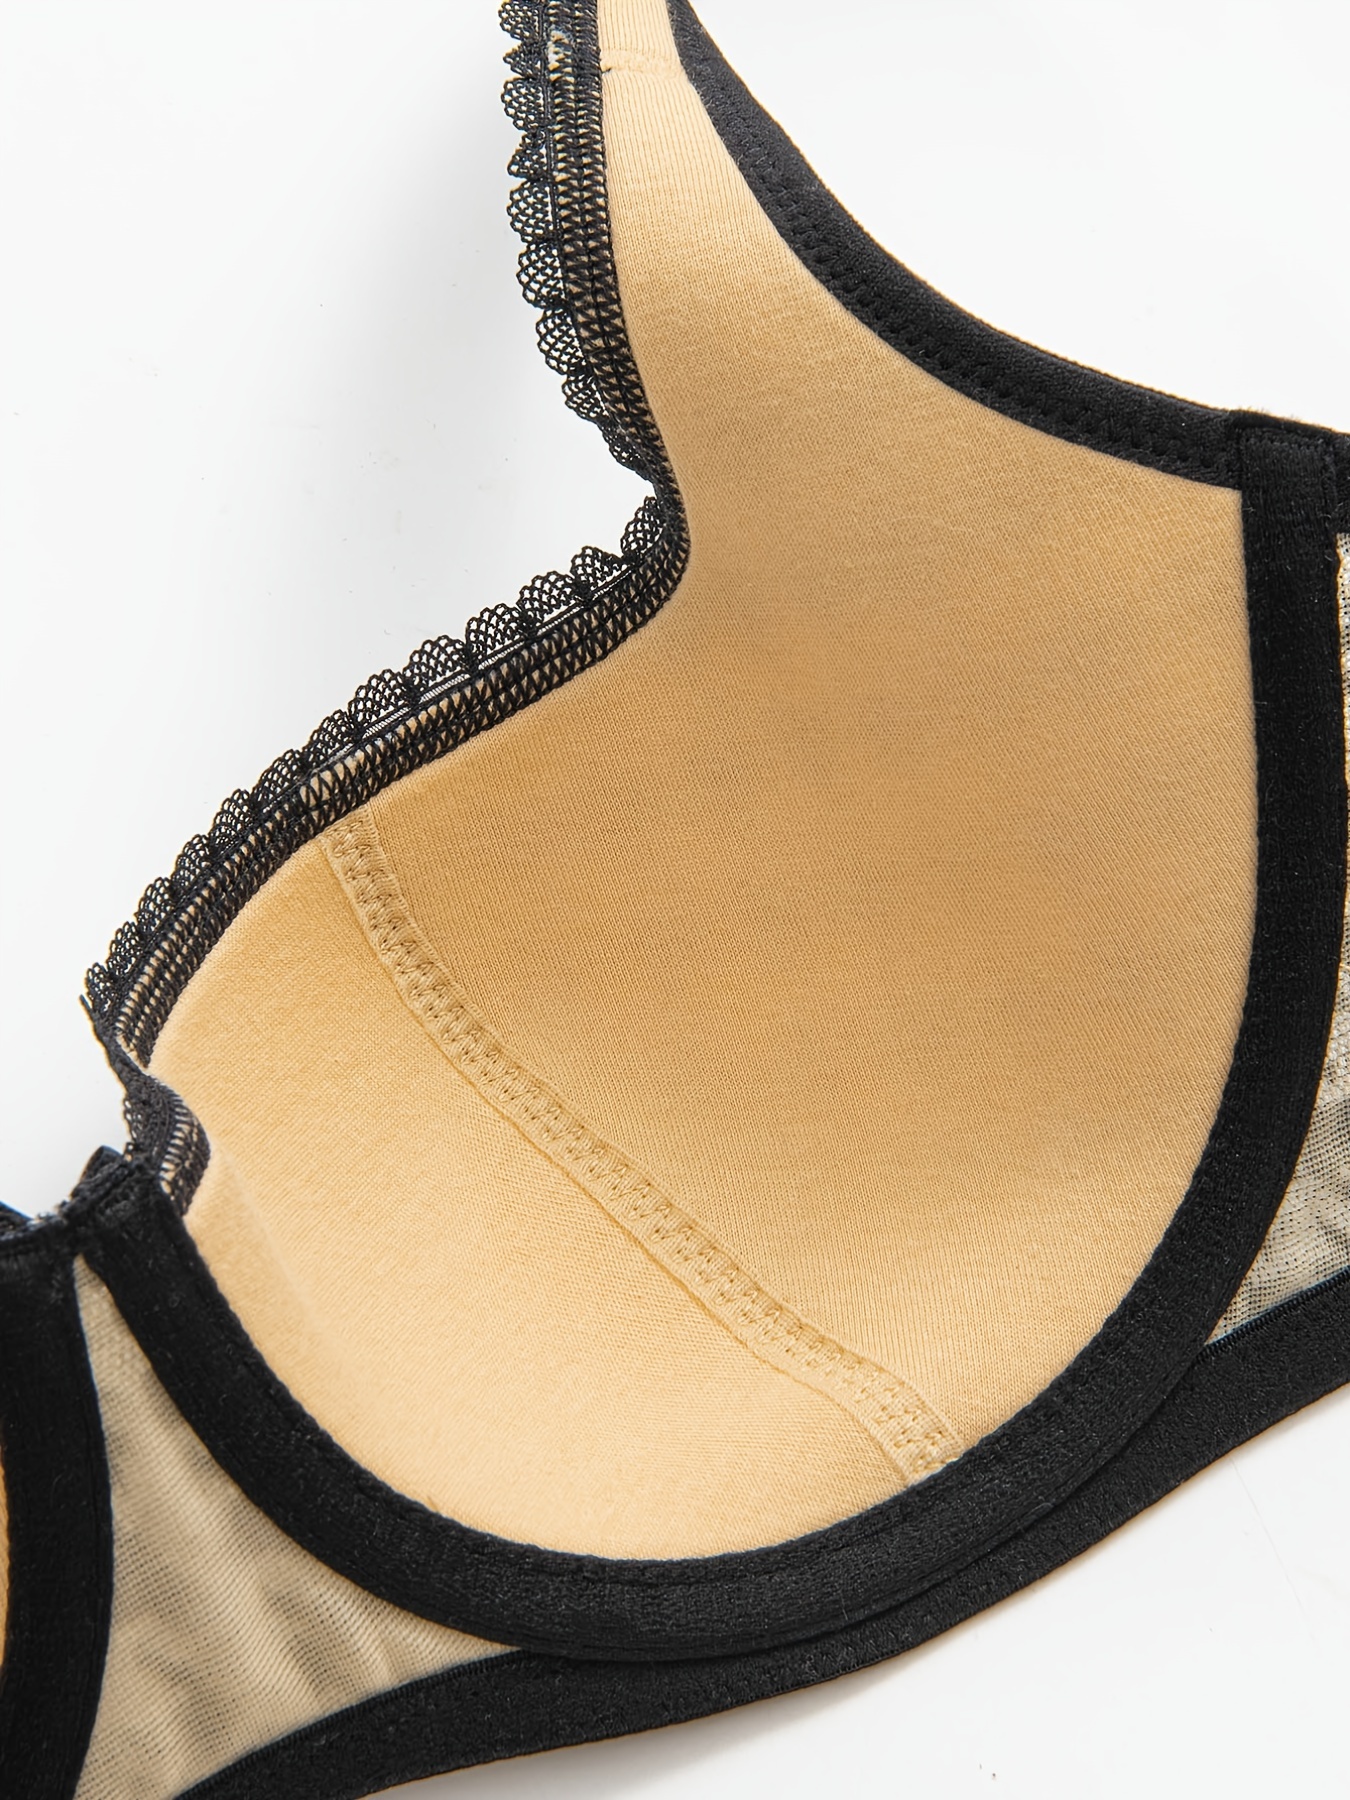 Calvin Klein Underwear Women's Unlined Balconette, Black, 32B